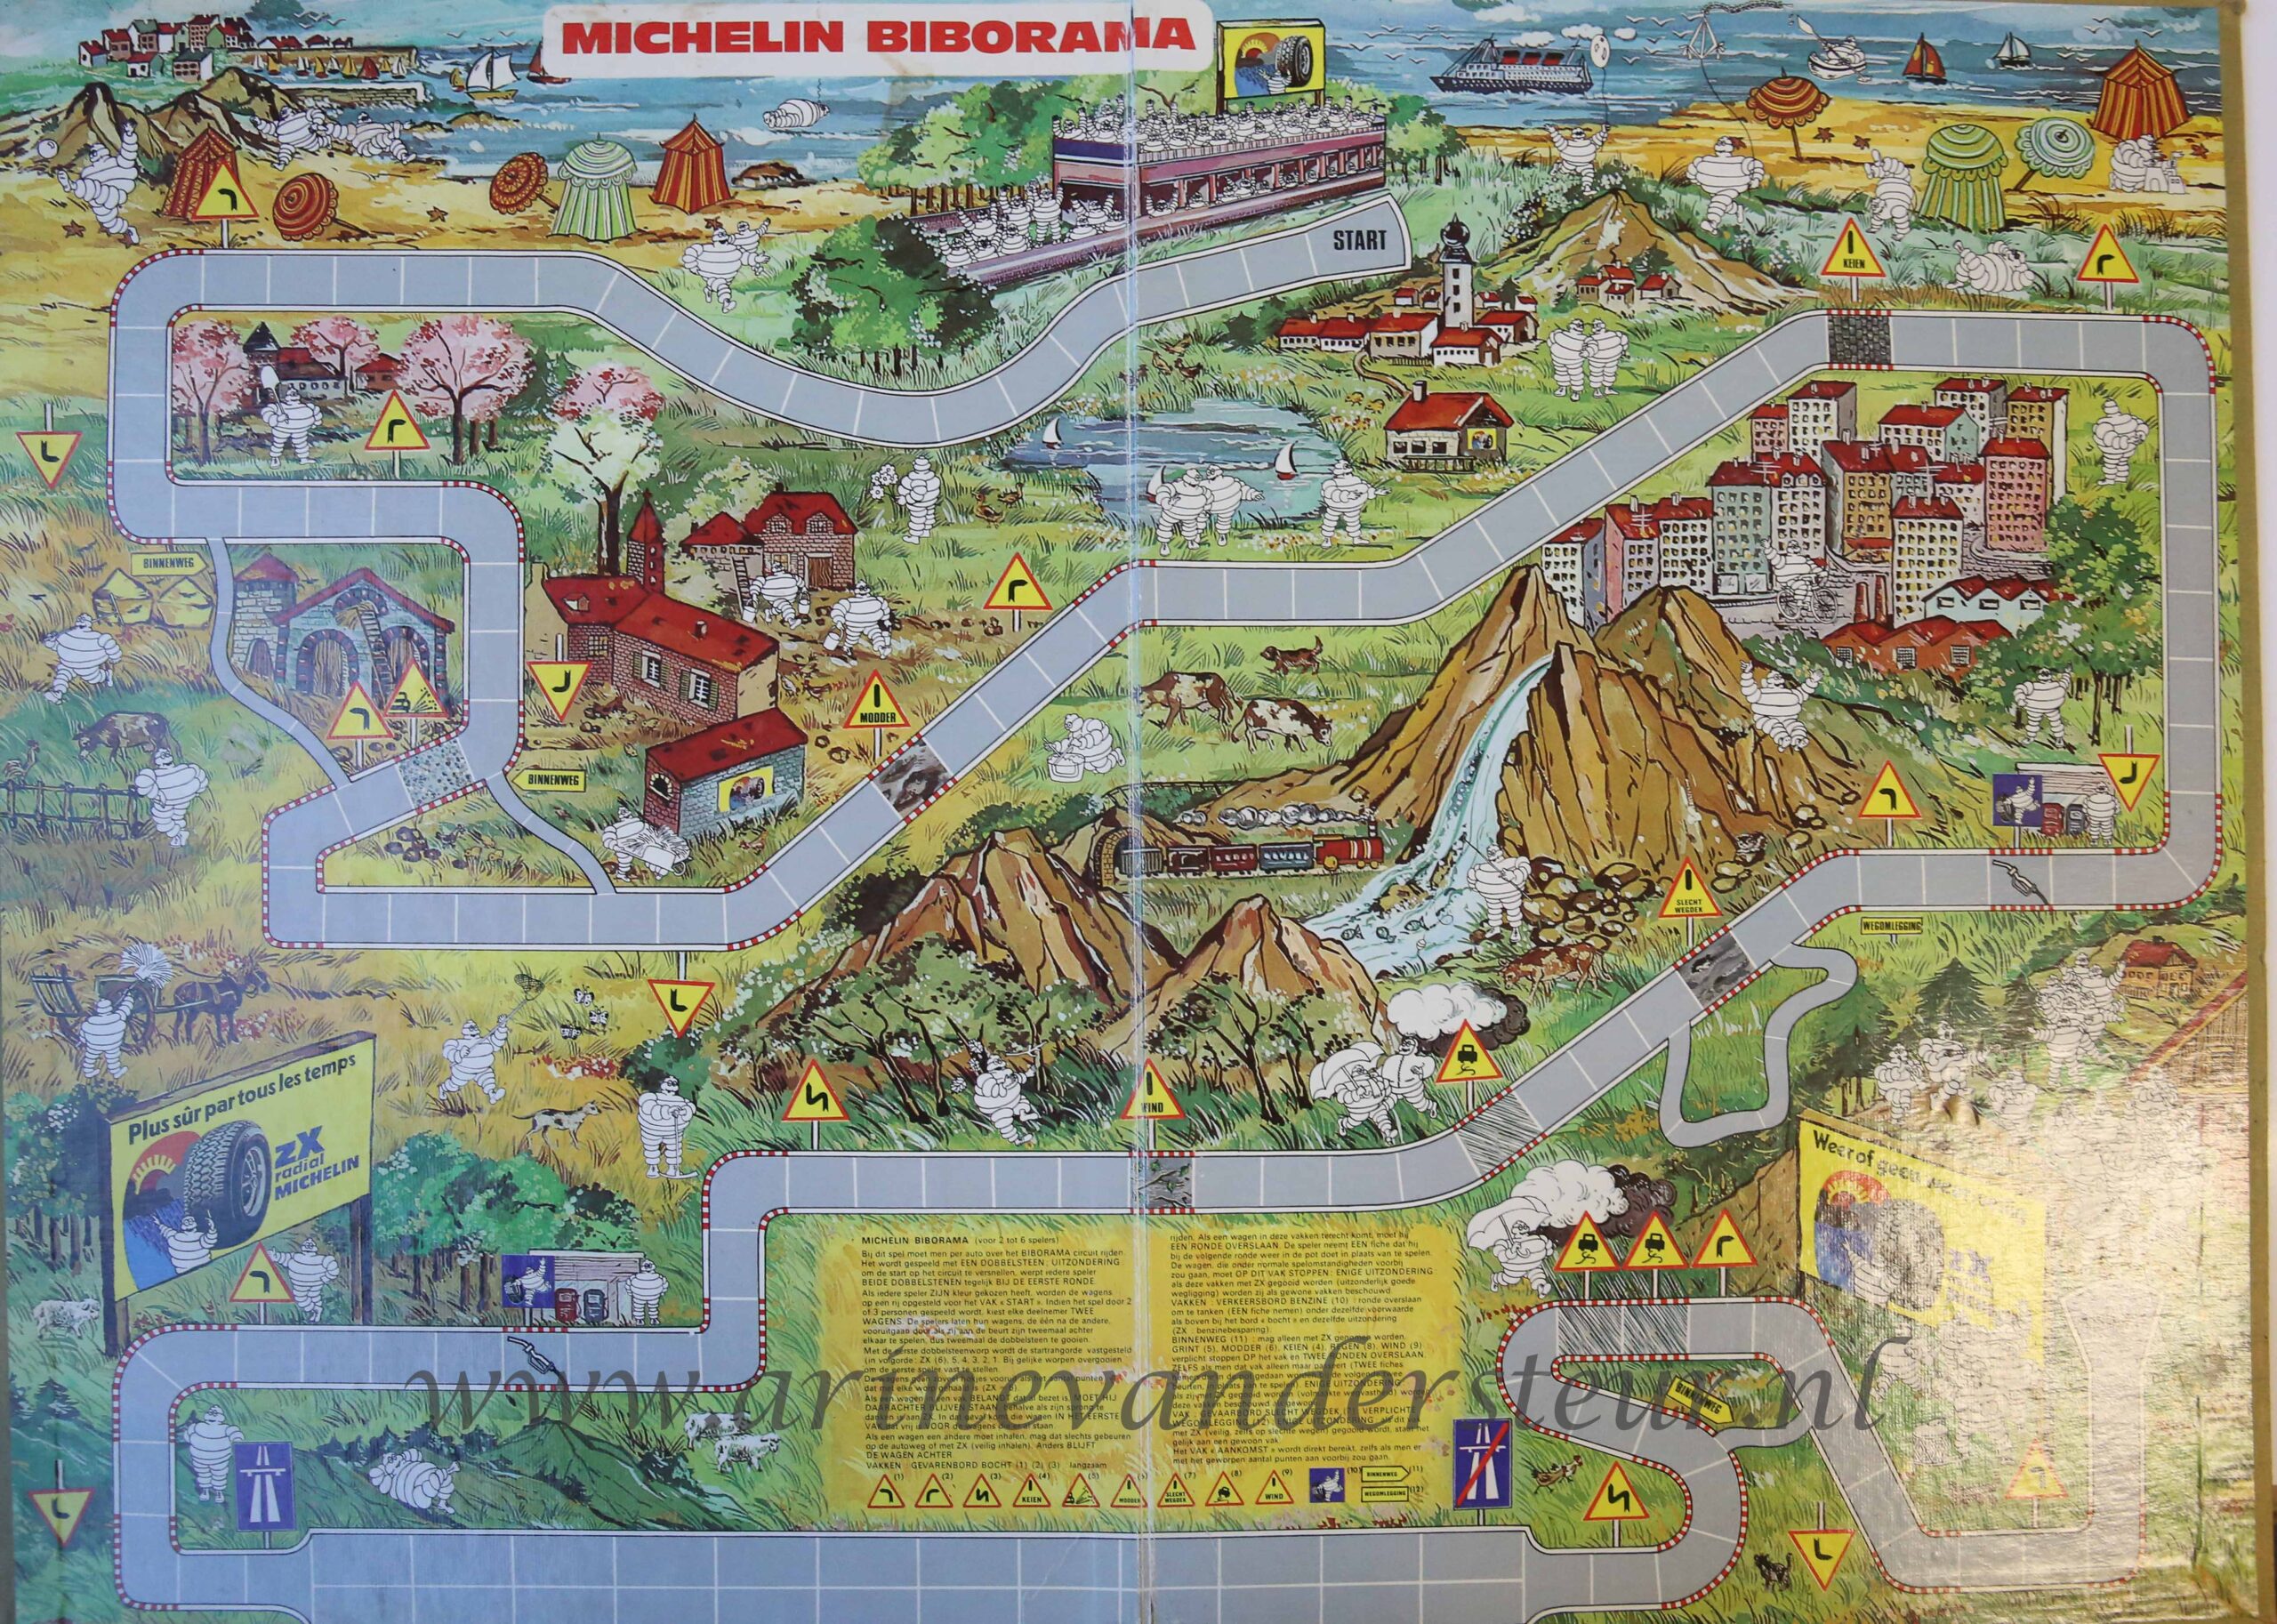 [Modern board game, car race, automobile] Michelin Biborama, ca. 1980.